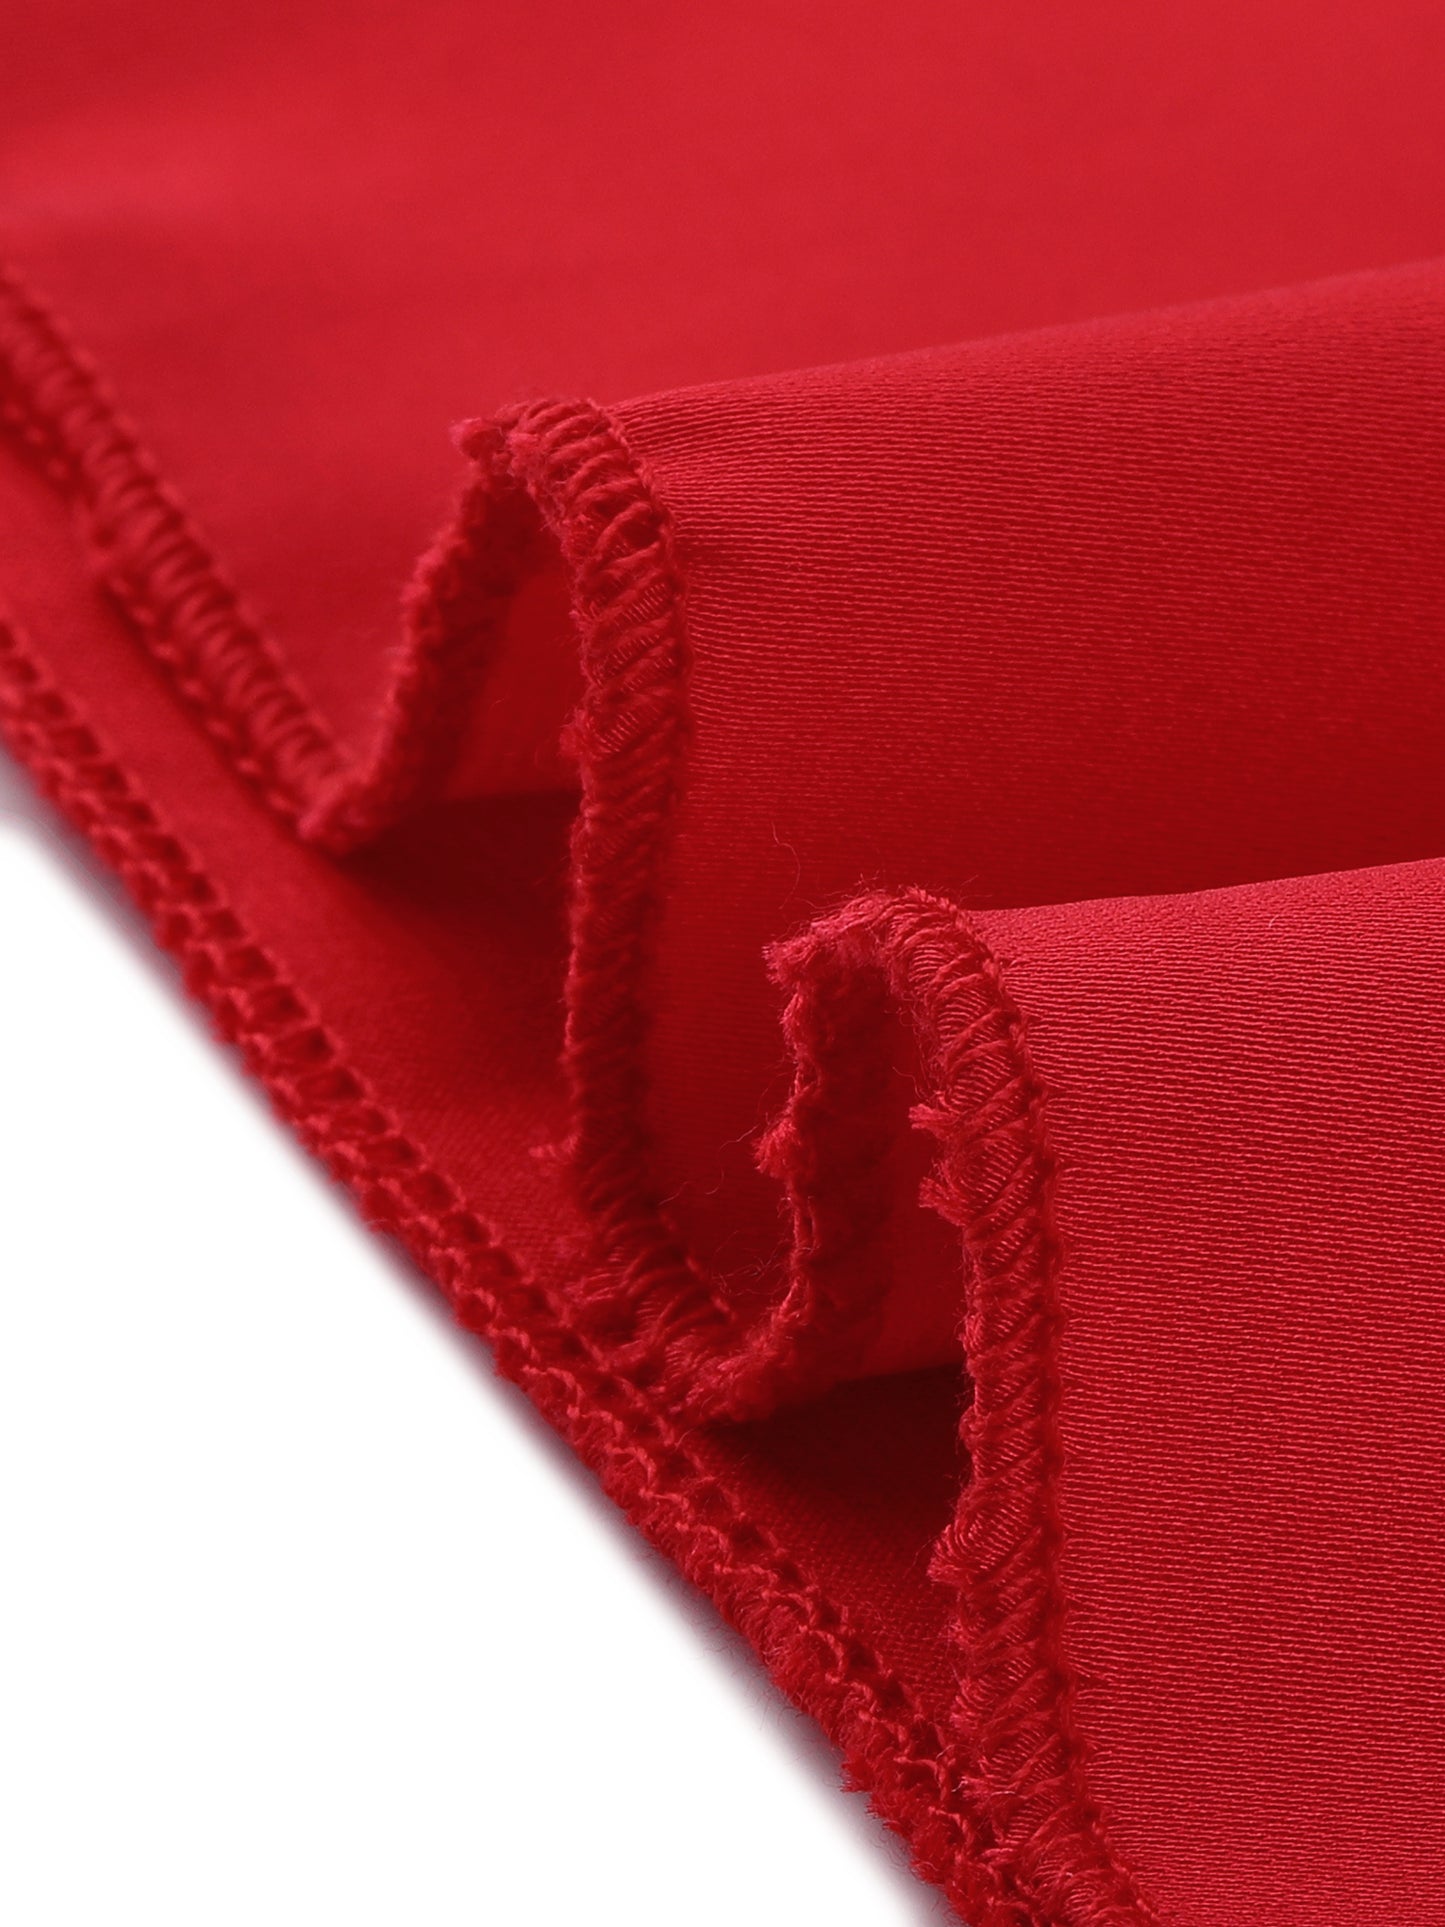 cheibear Satin Lingerie Lace Trim Cami Tops Shorts Sleepwear Pajamas Sets Red